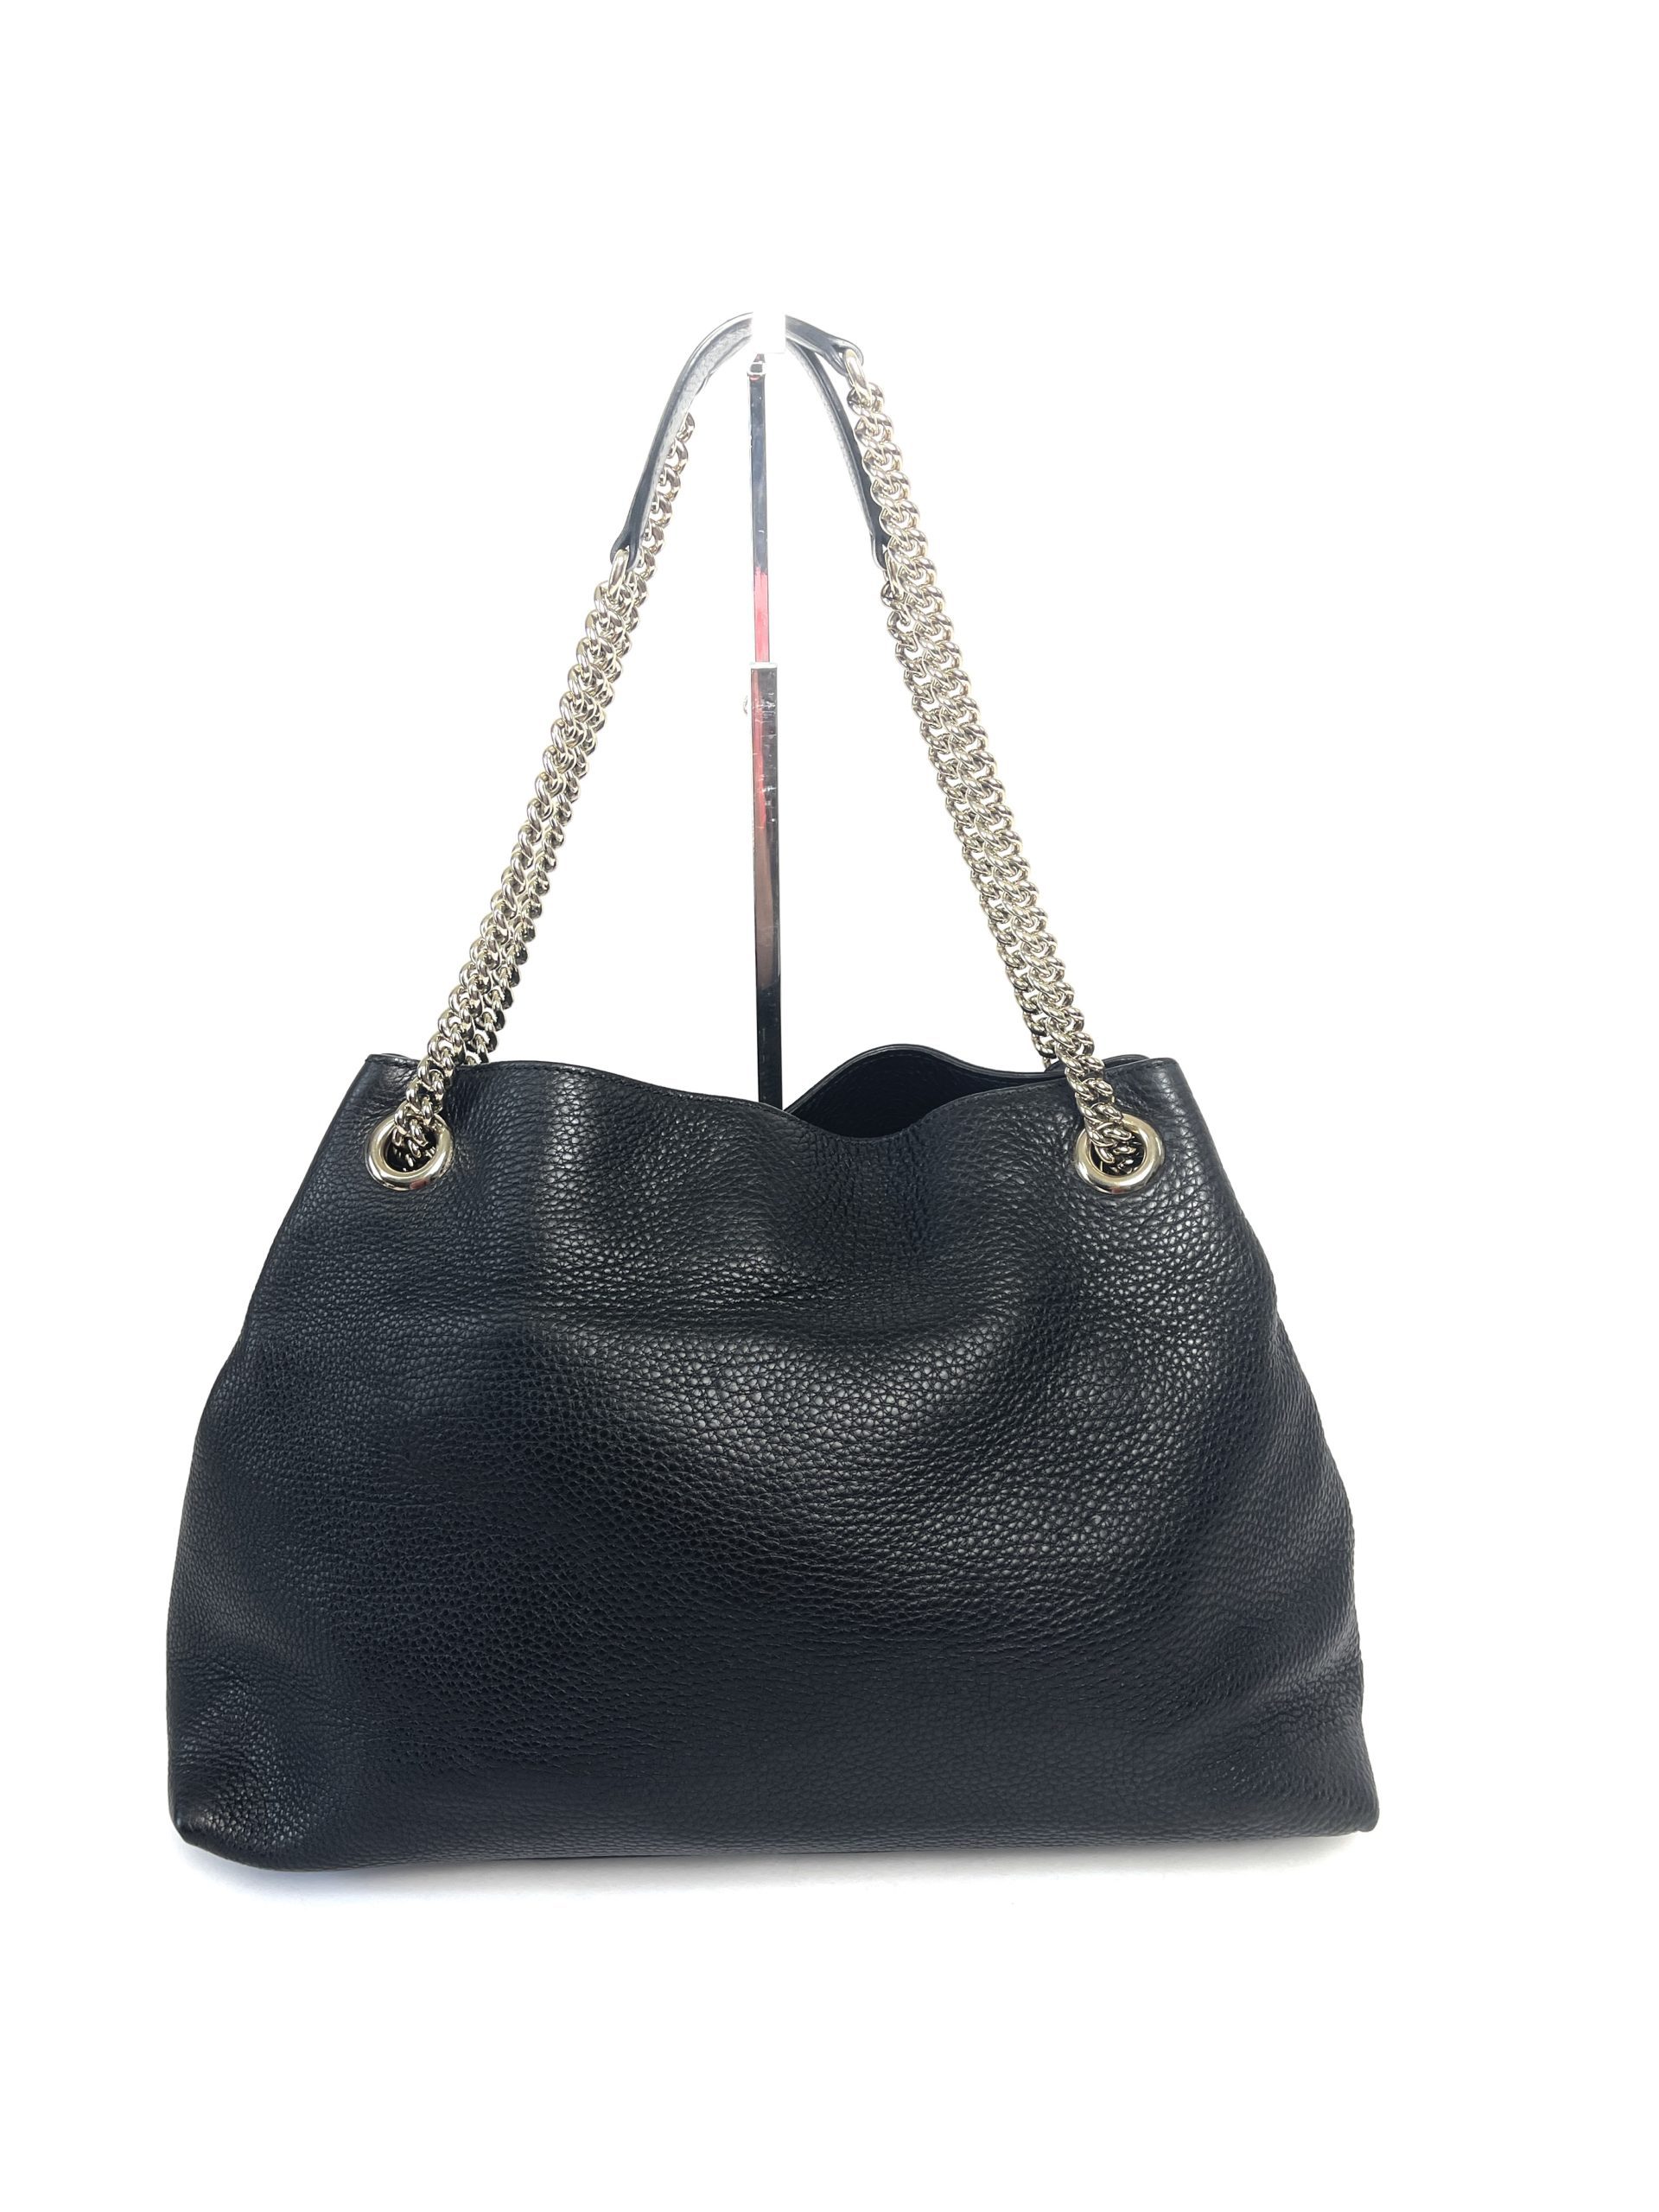 Gucci Soho Pebbled Leather Chain Medium Black Shoulder Bag - A